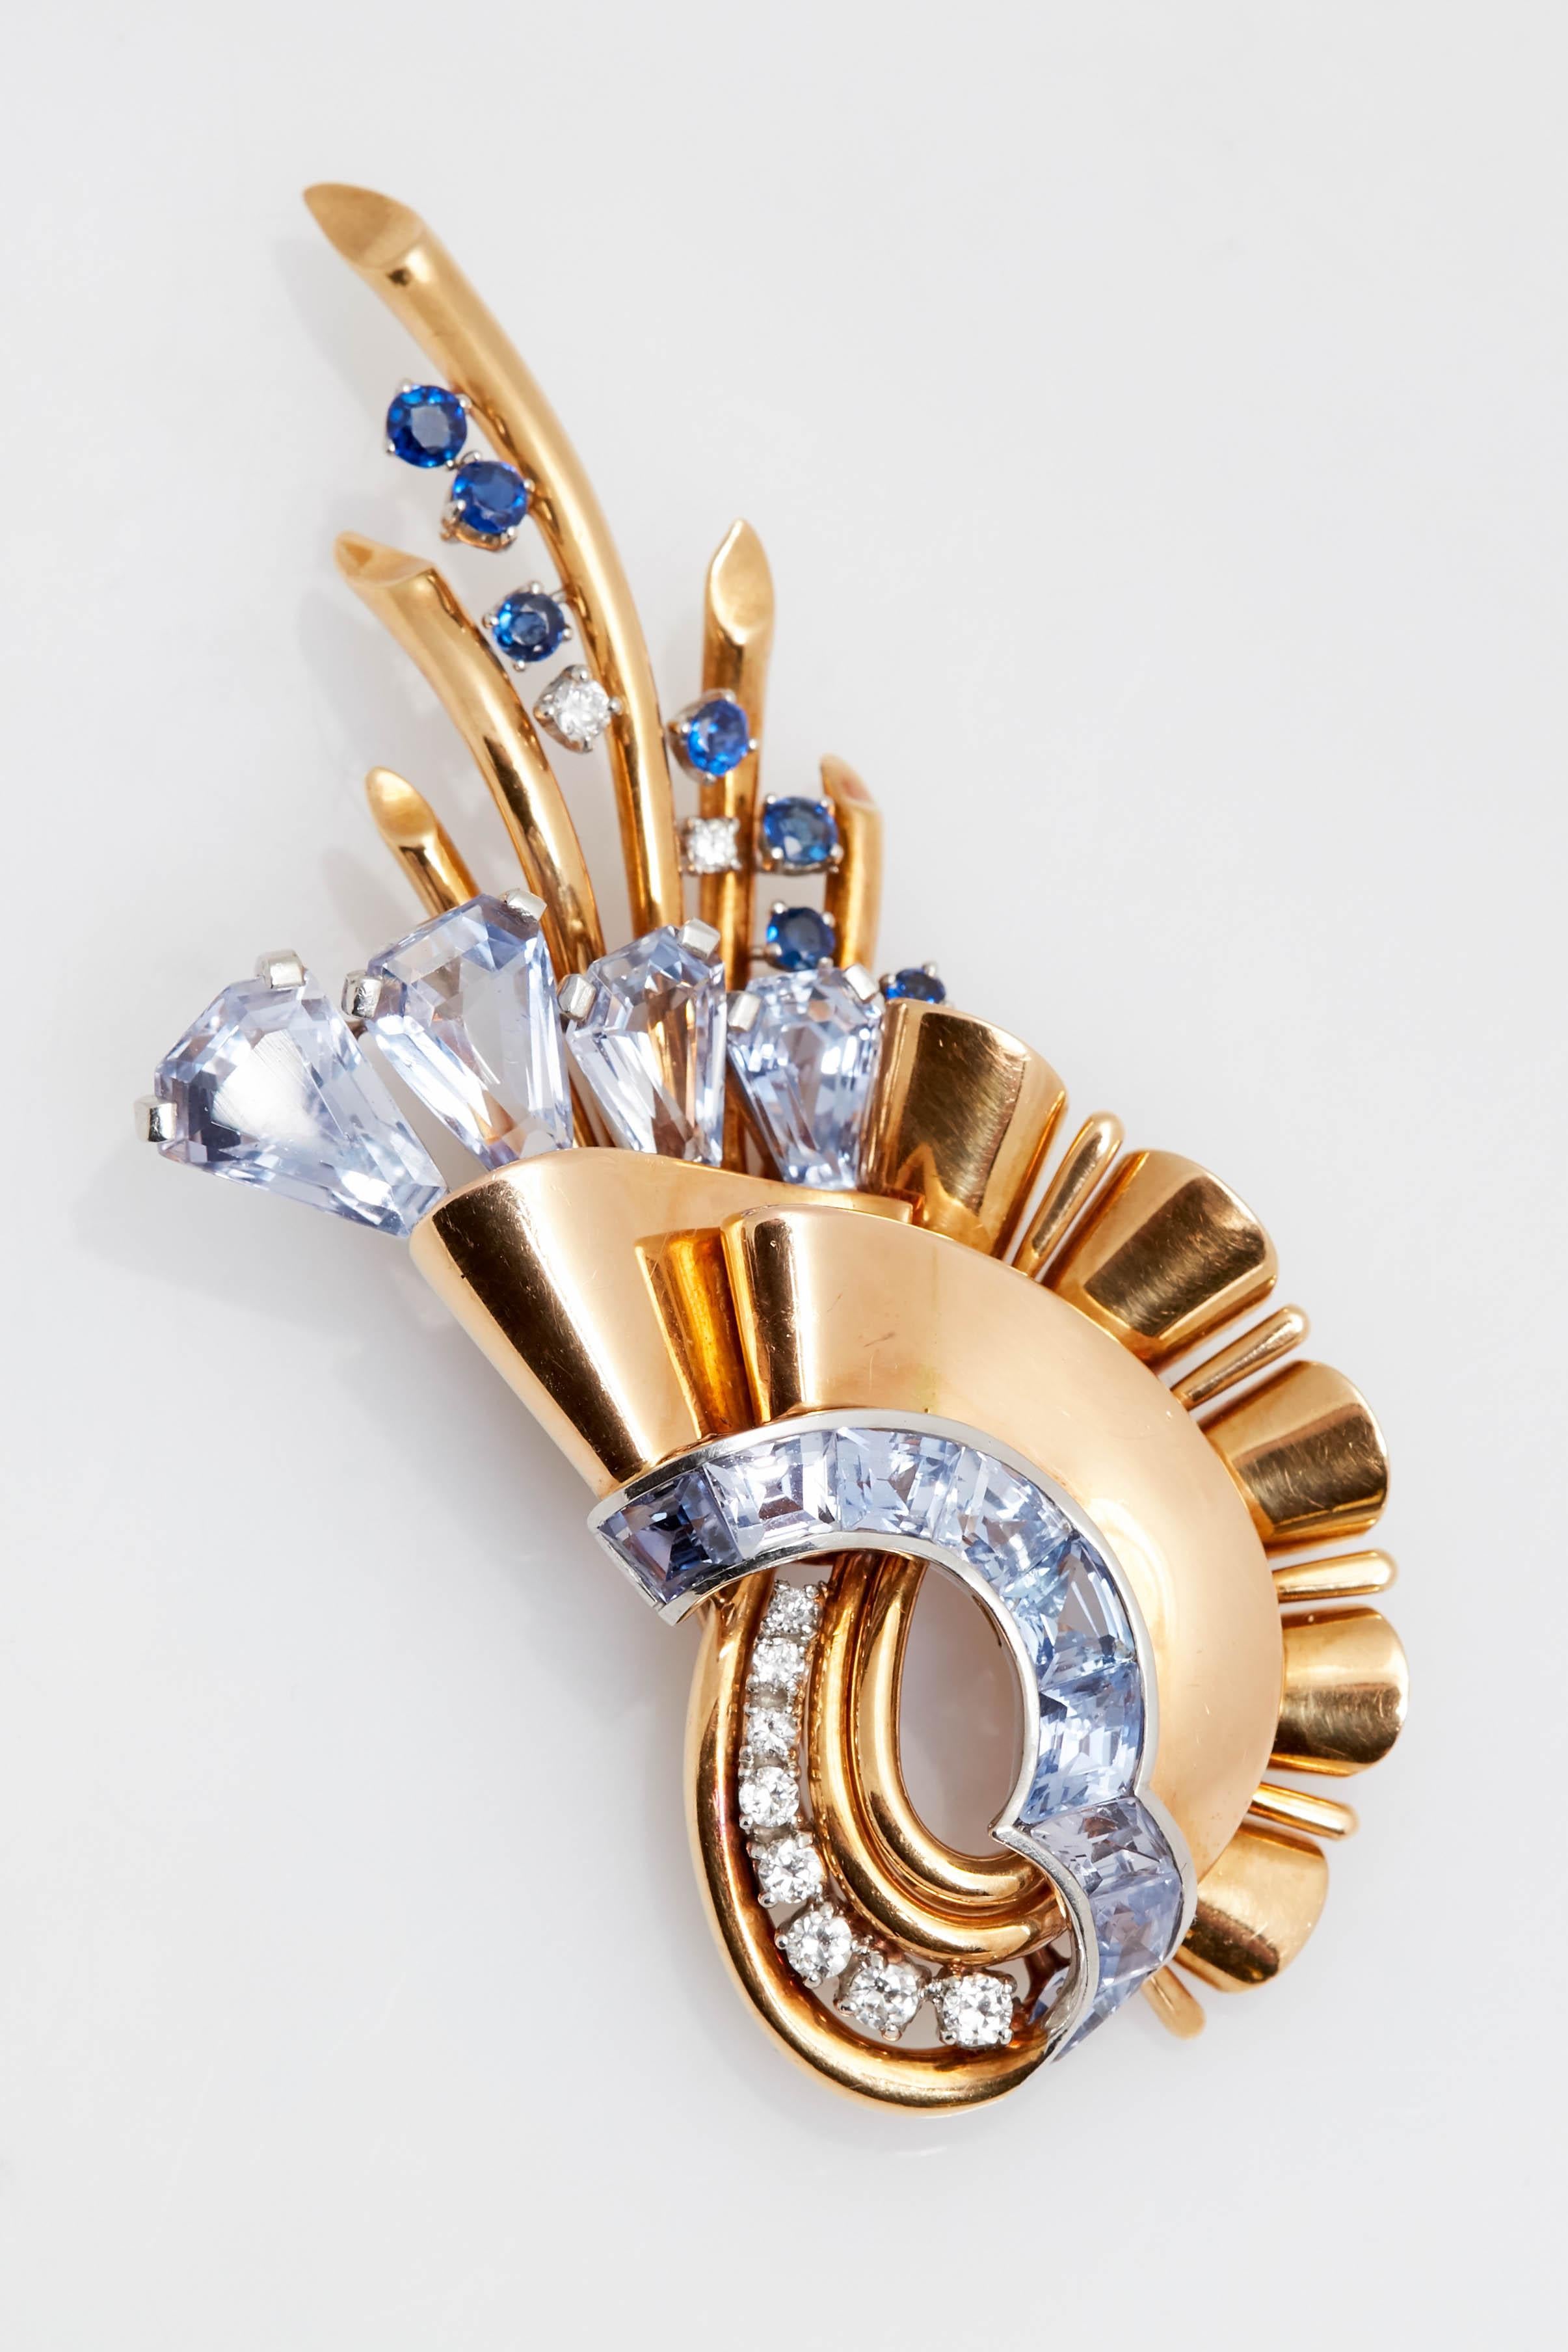 Retro Oscar Heyman Sapphire Diamond Gold Brooch For Sale